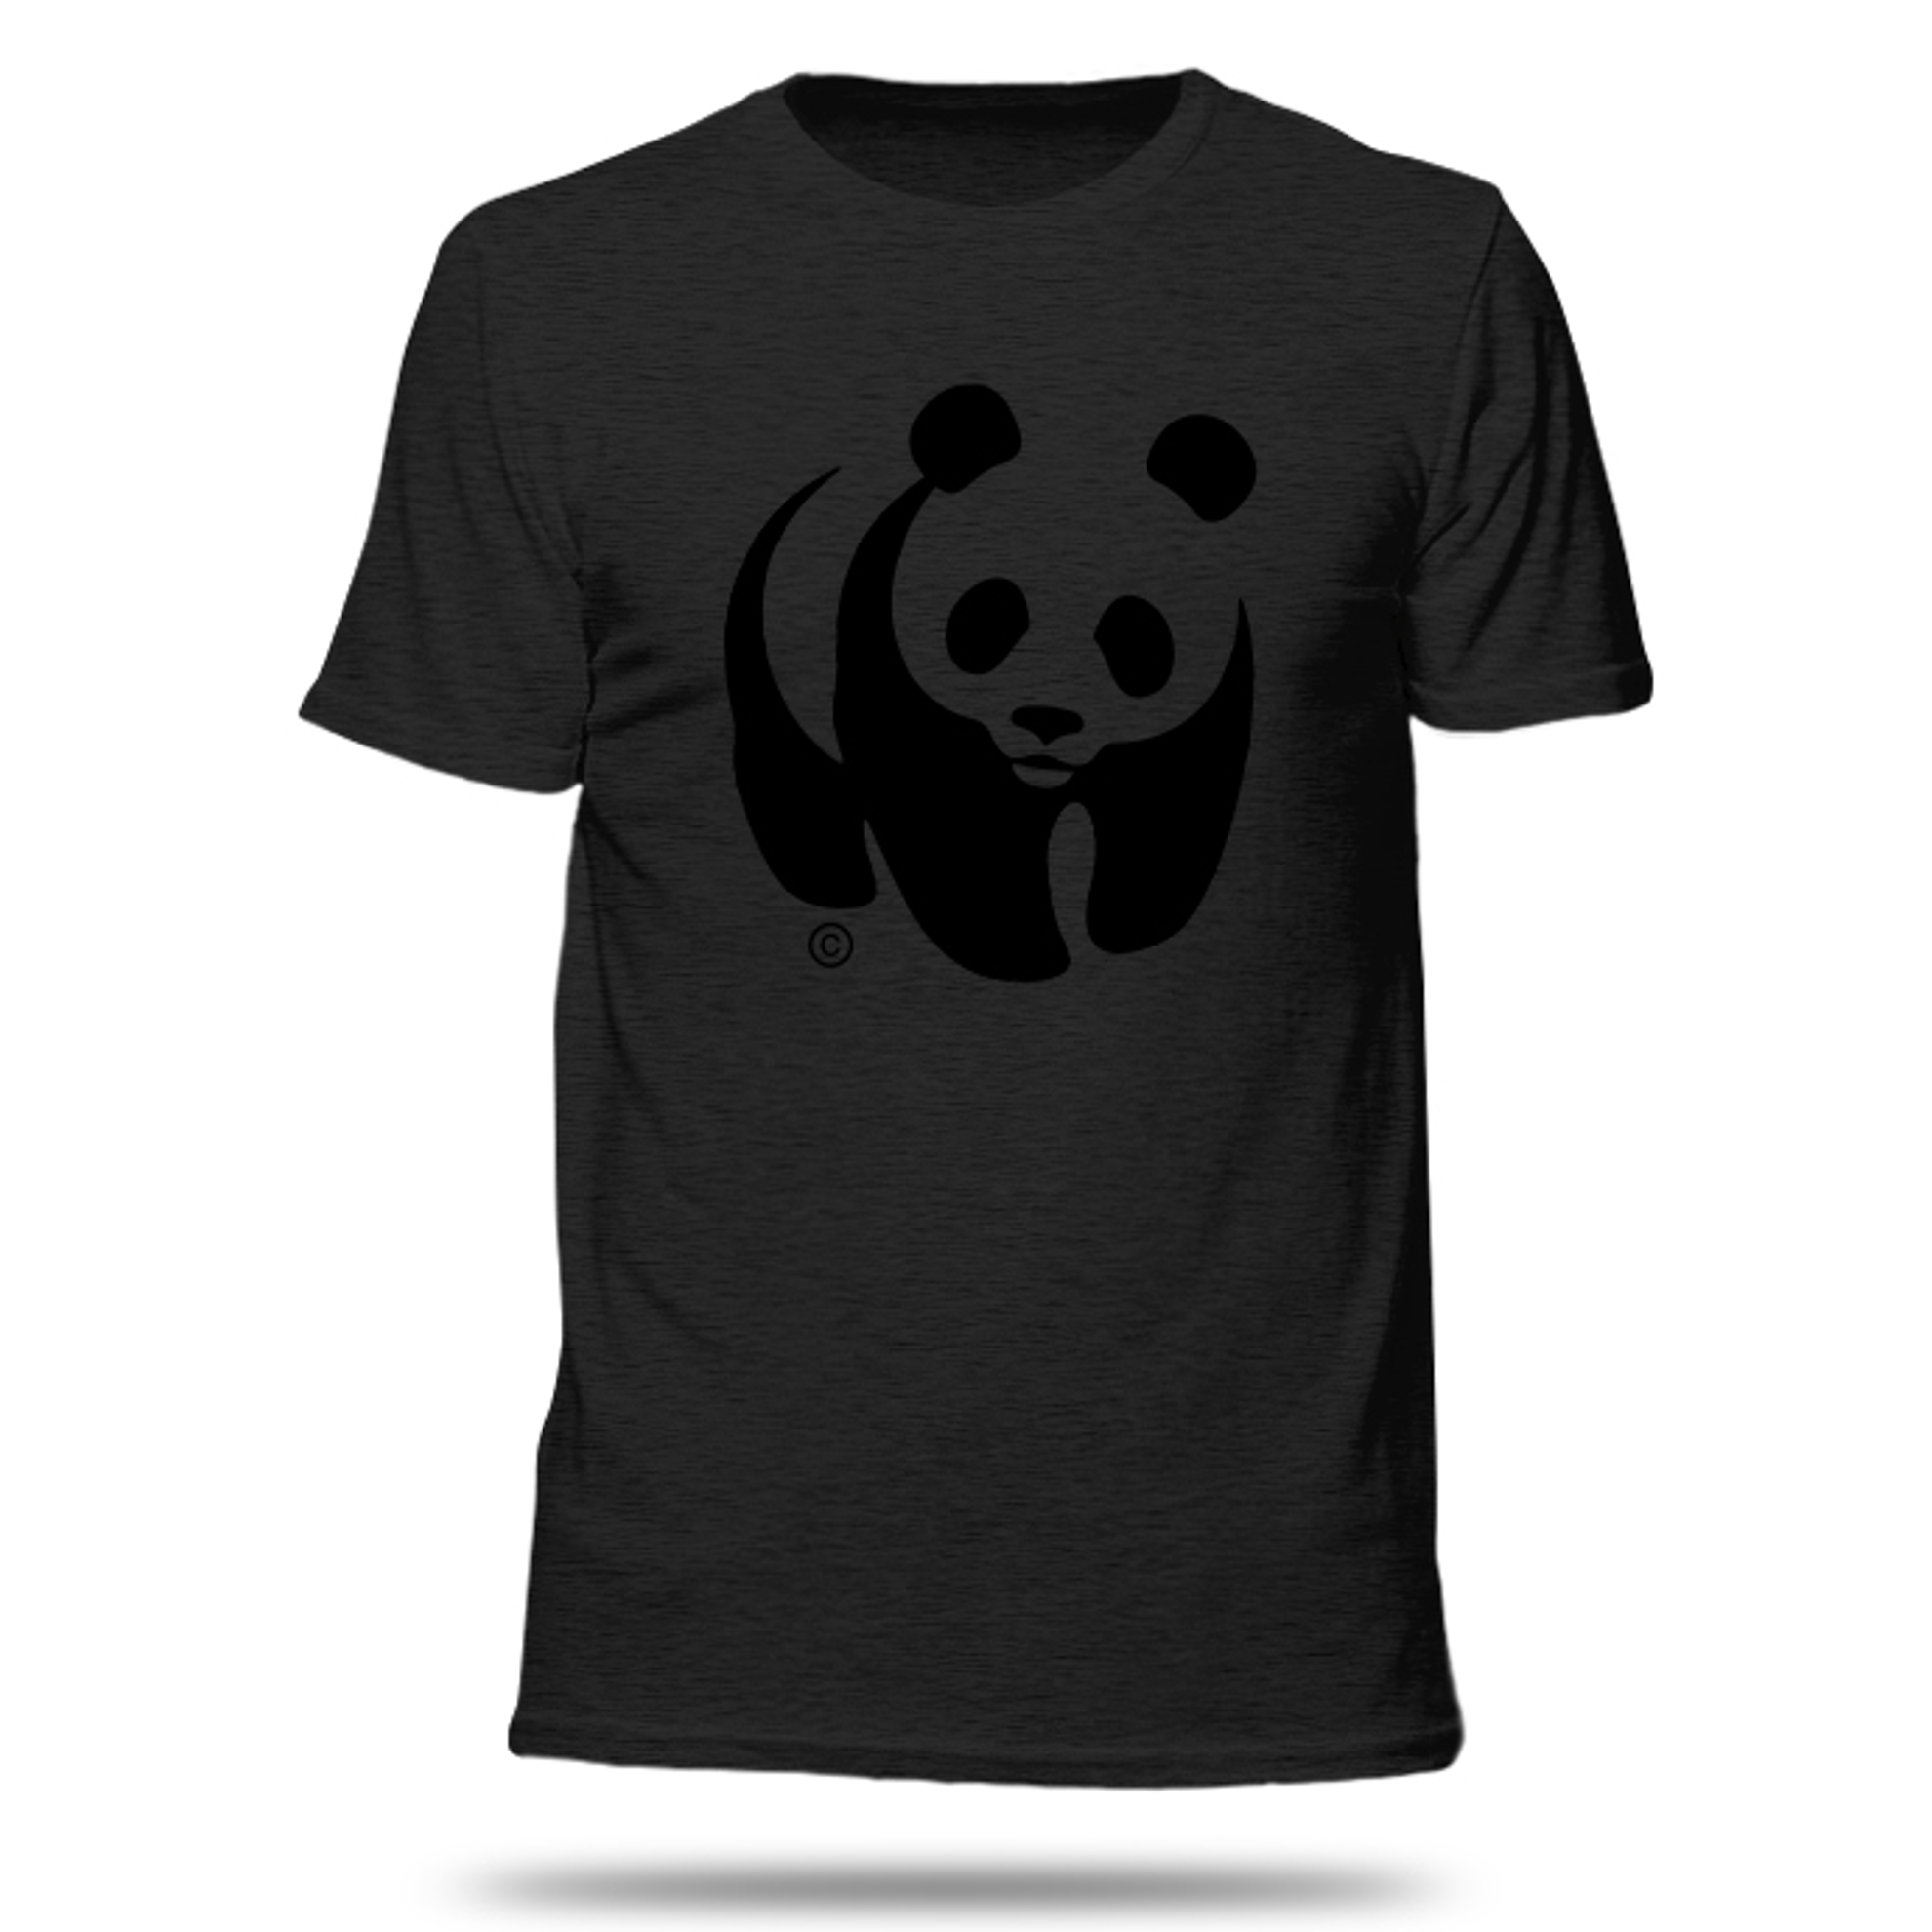 Unisex black panda t-shirt